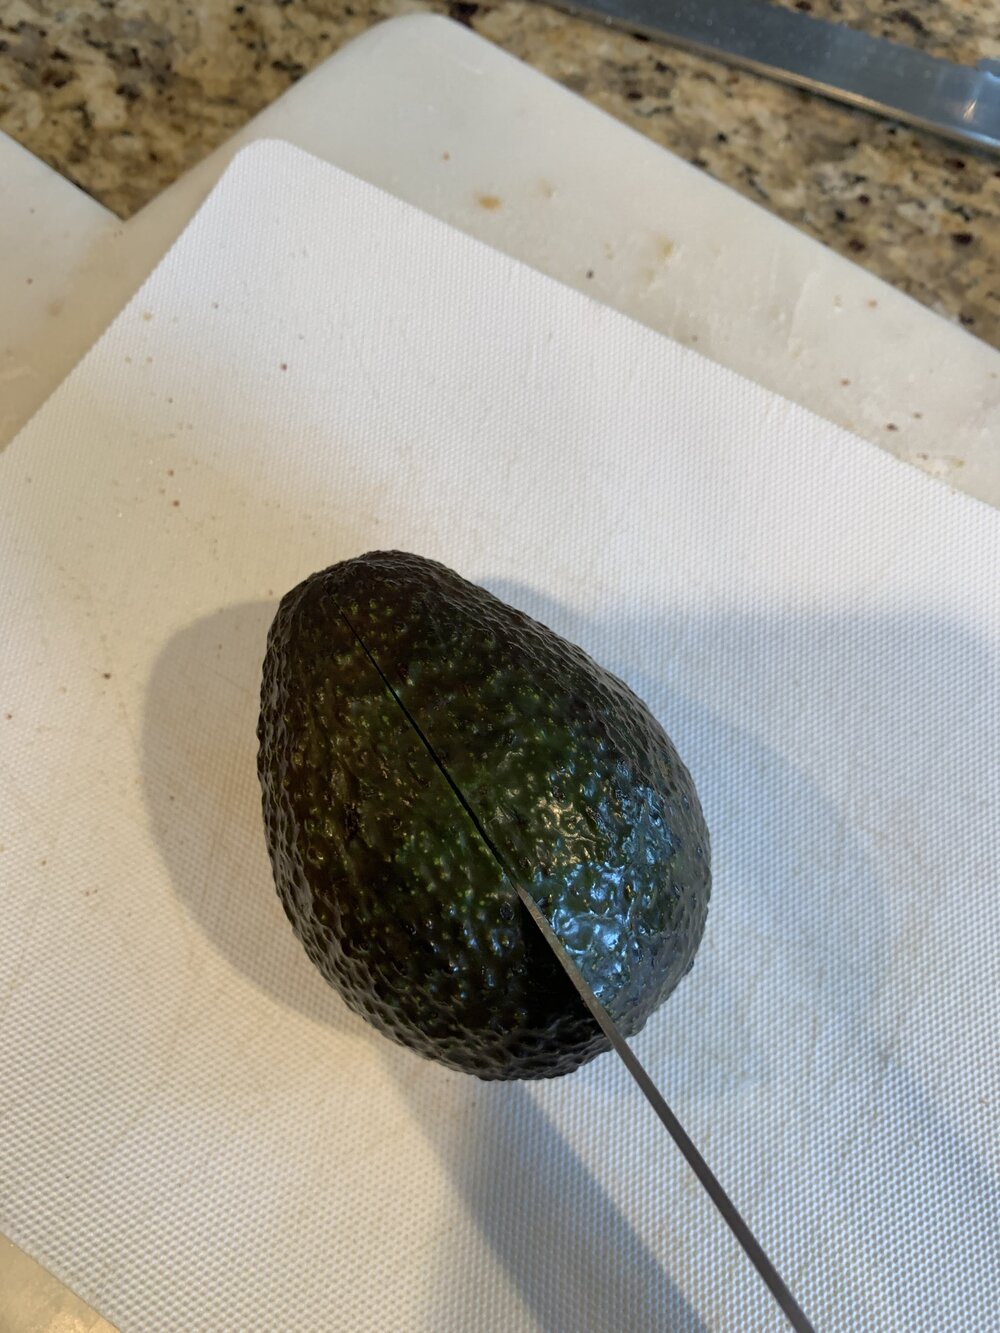 Step 2: Cut the avocado in half